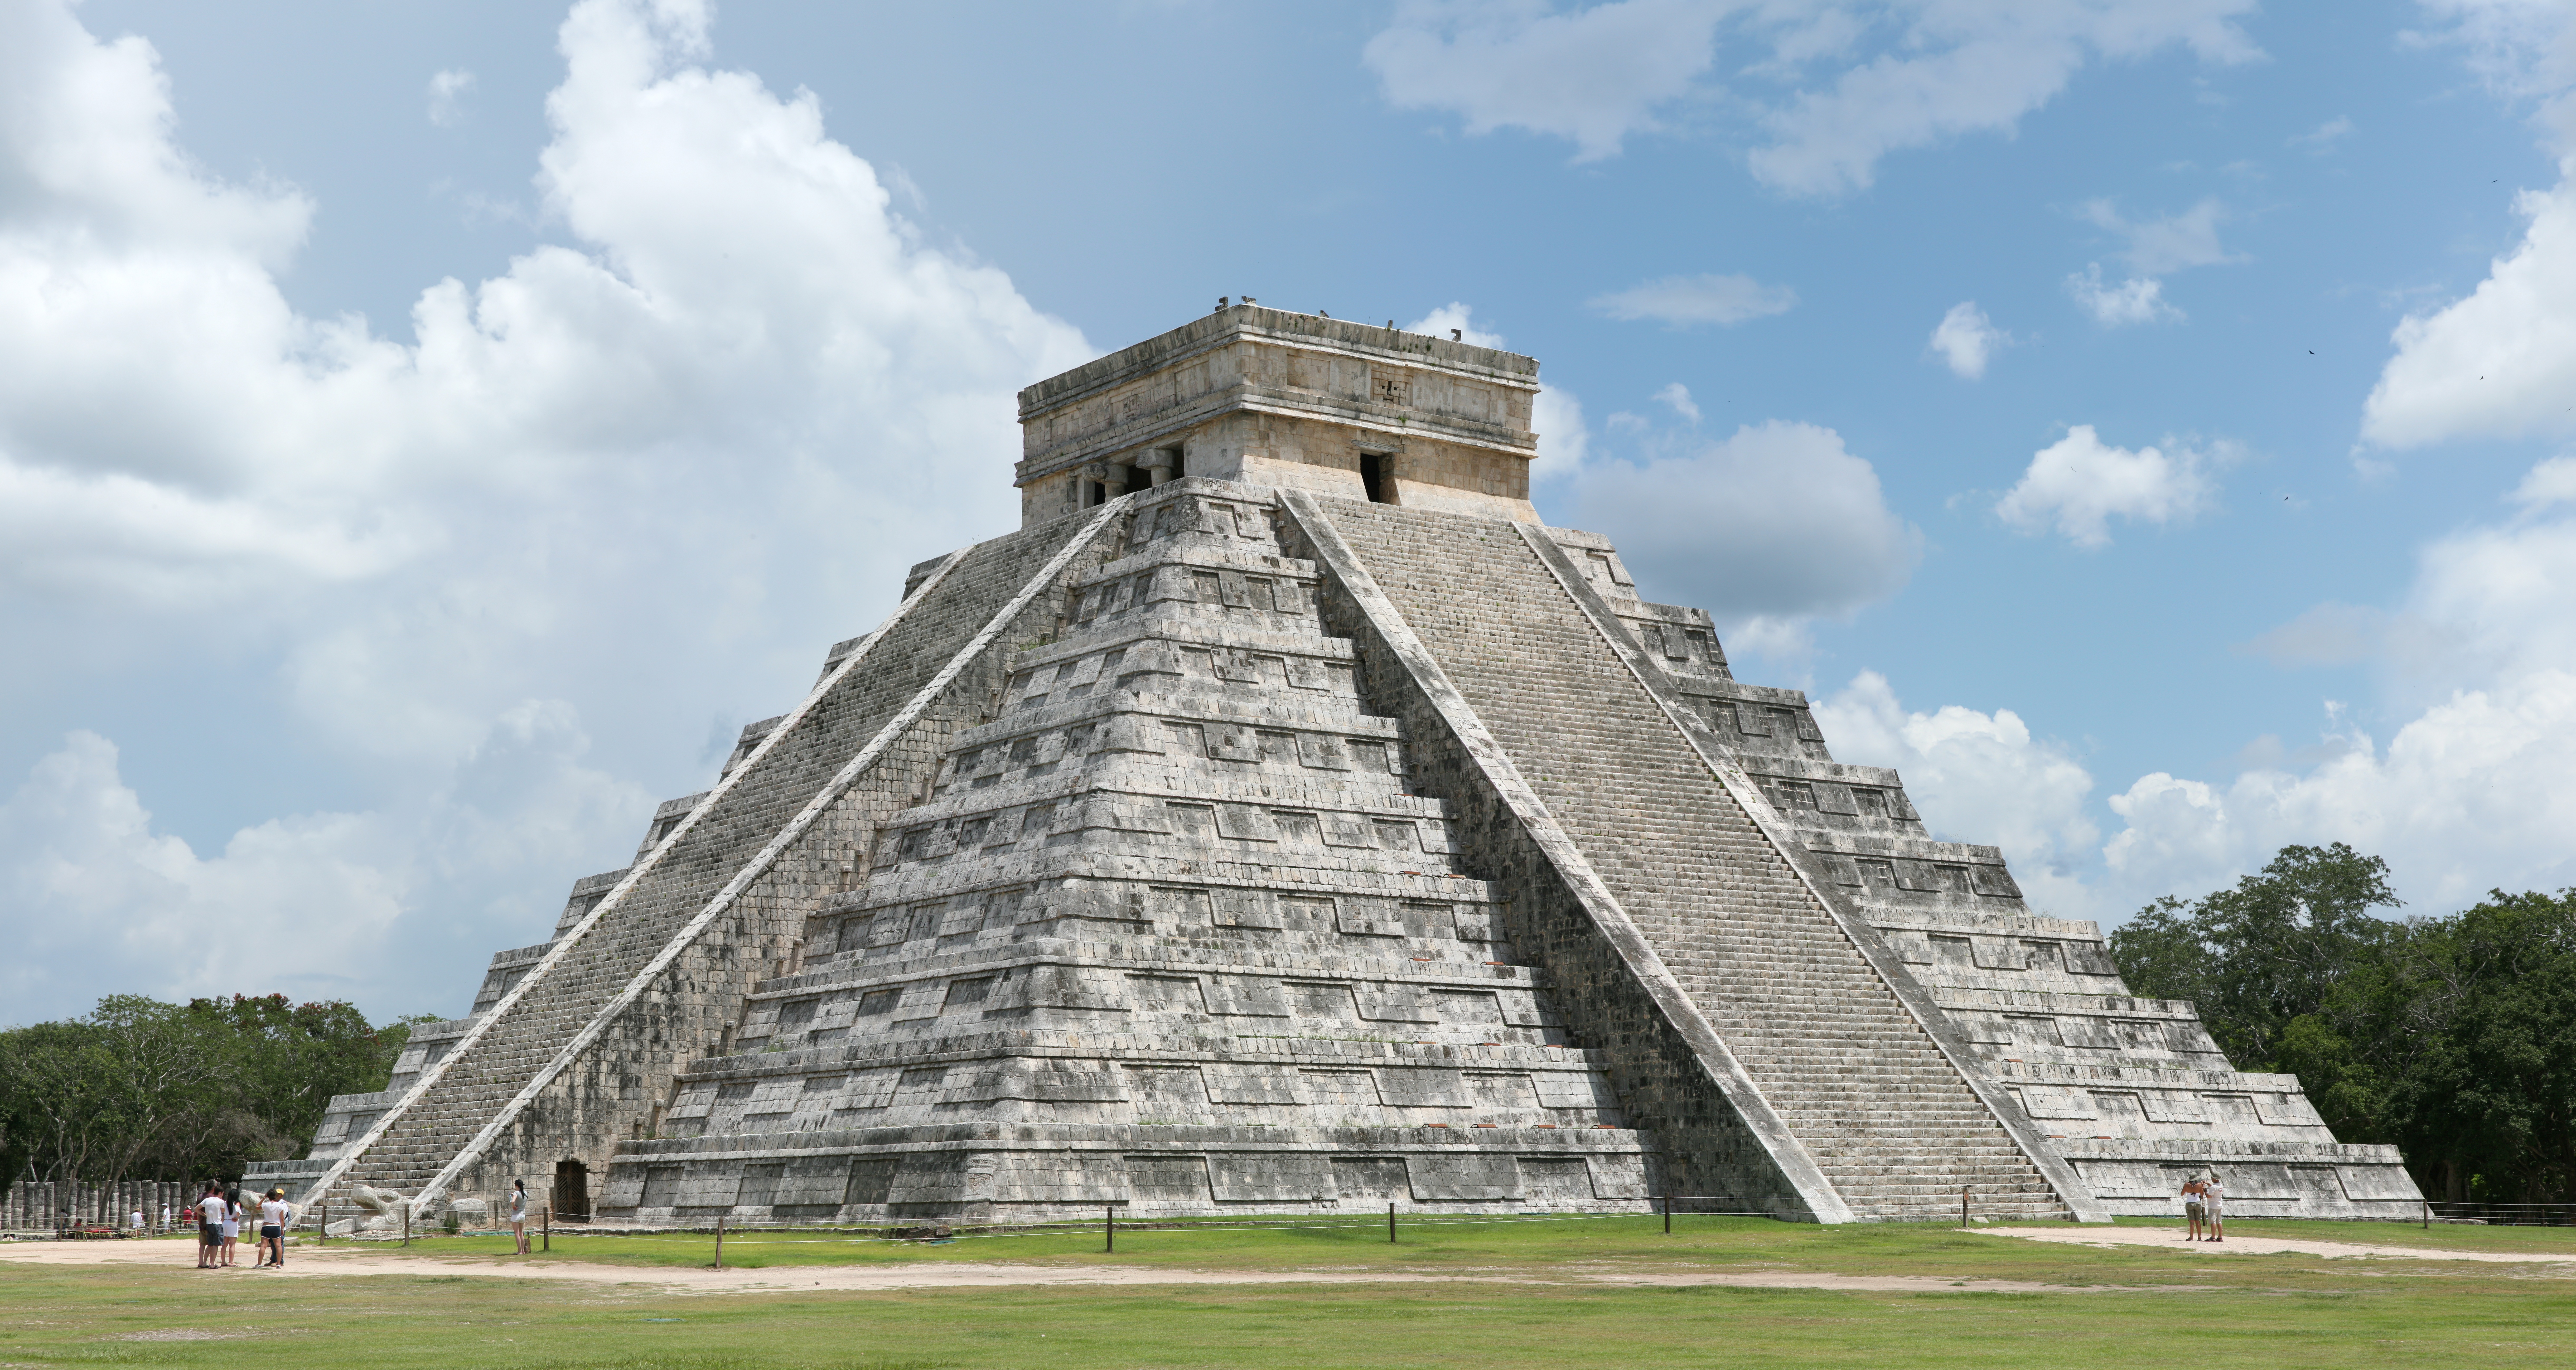 El Capital in Chichen Itzá, credit: Wikipedia